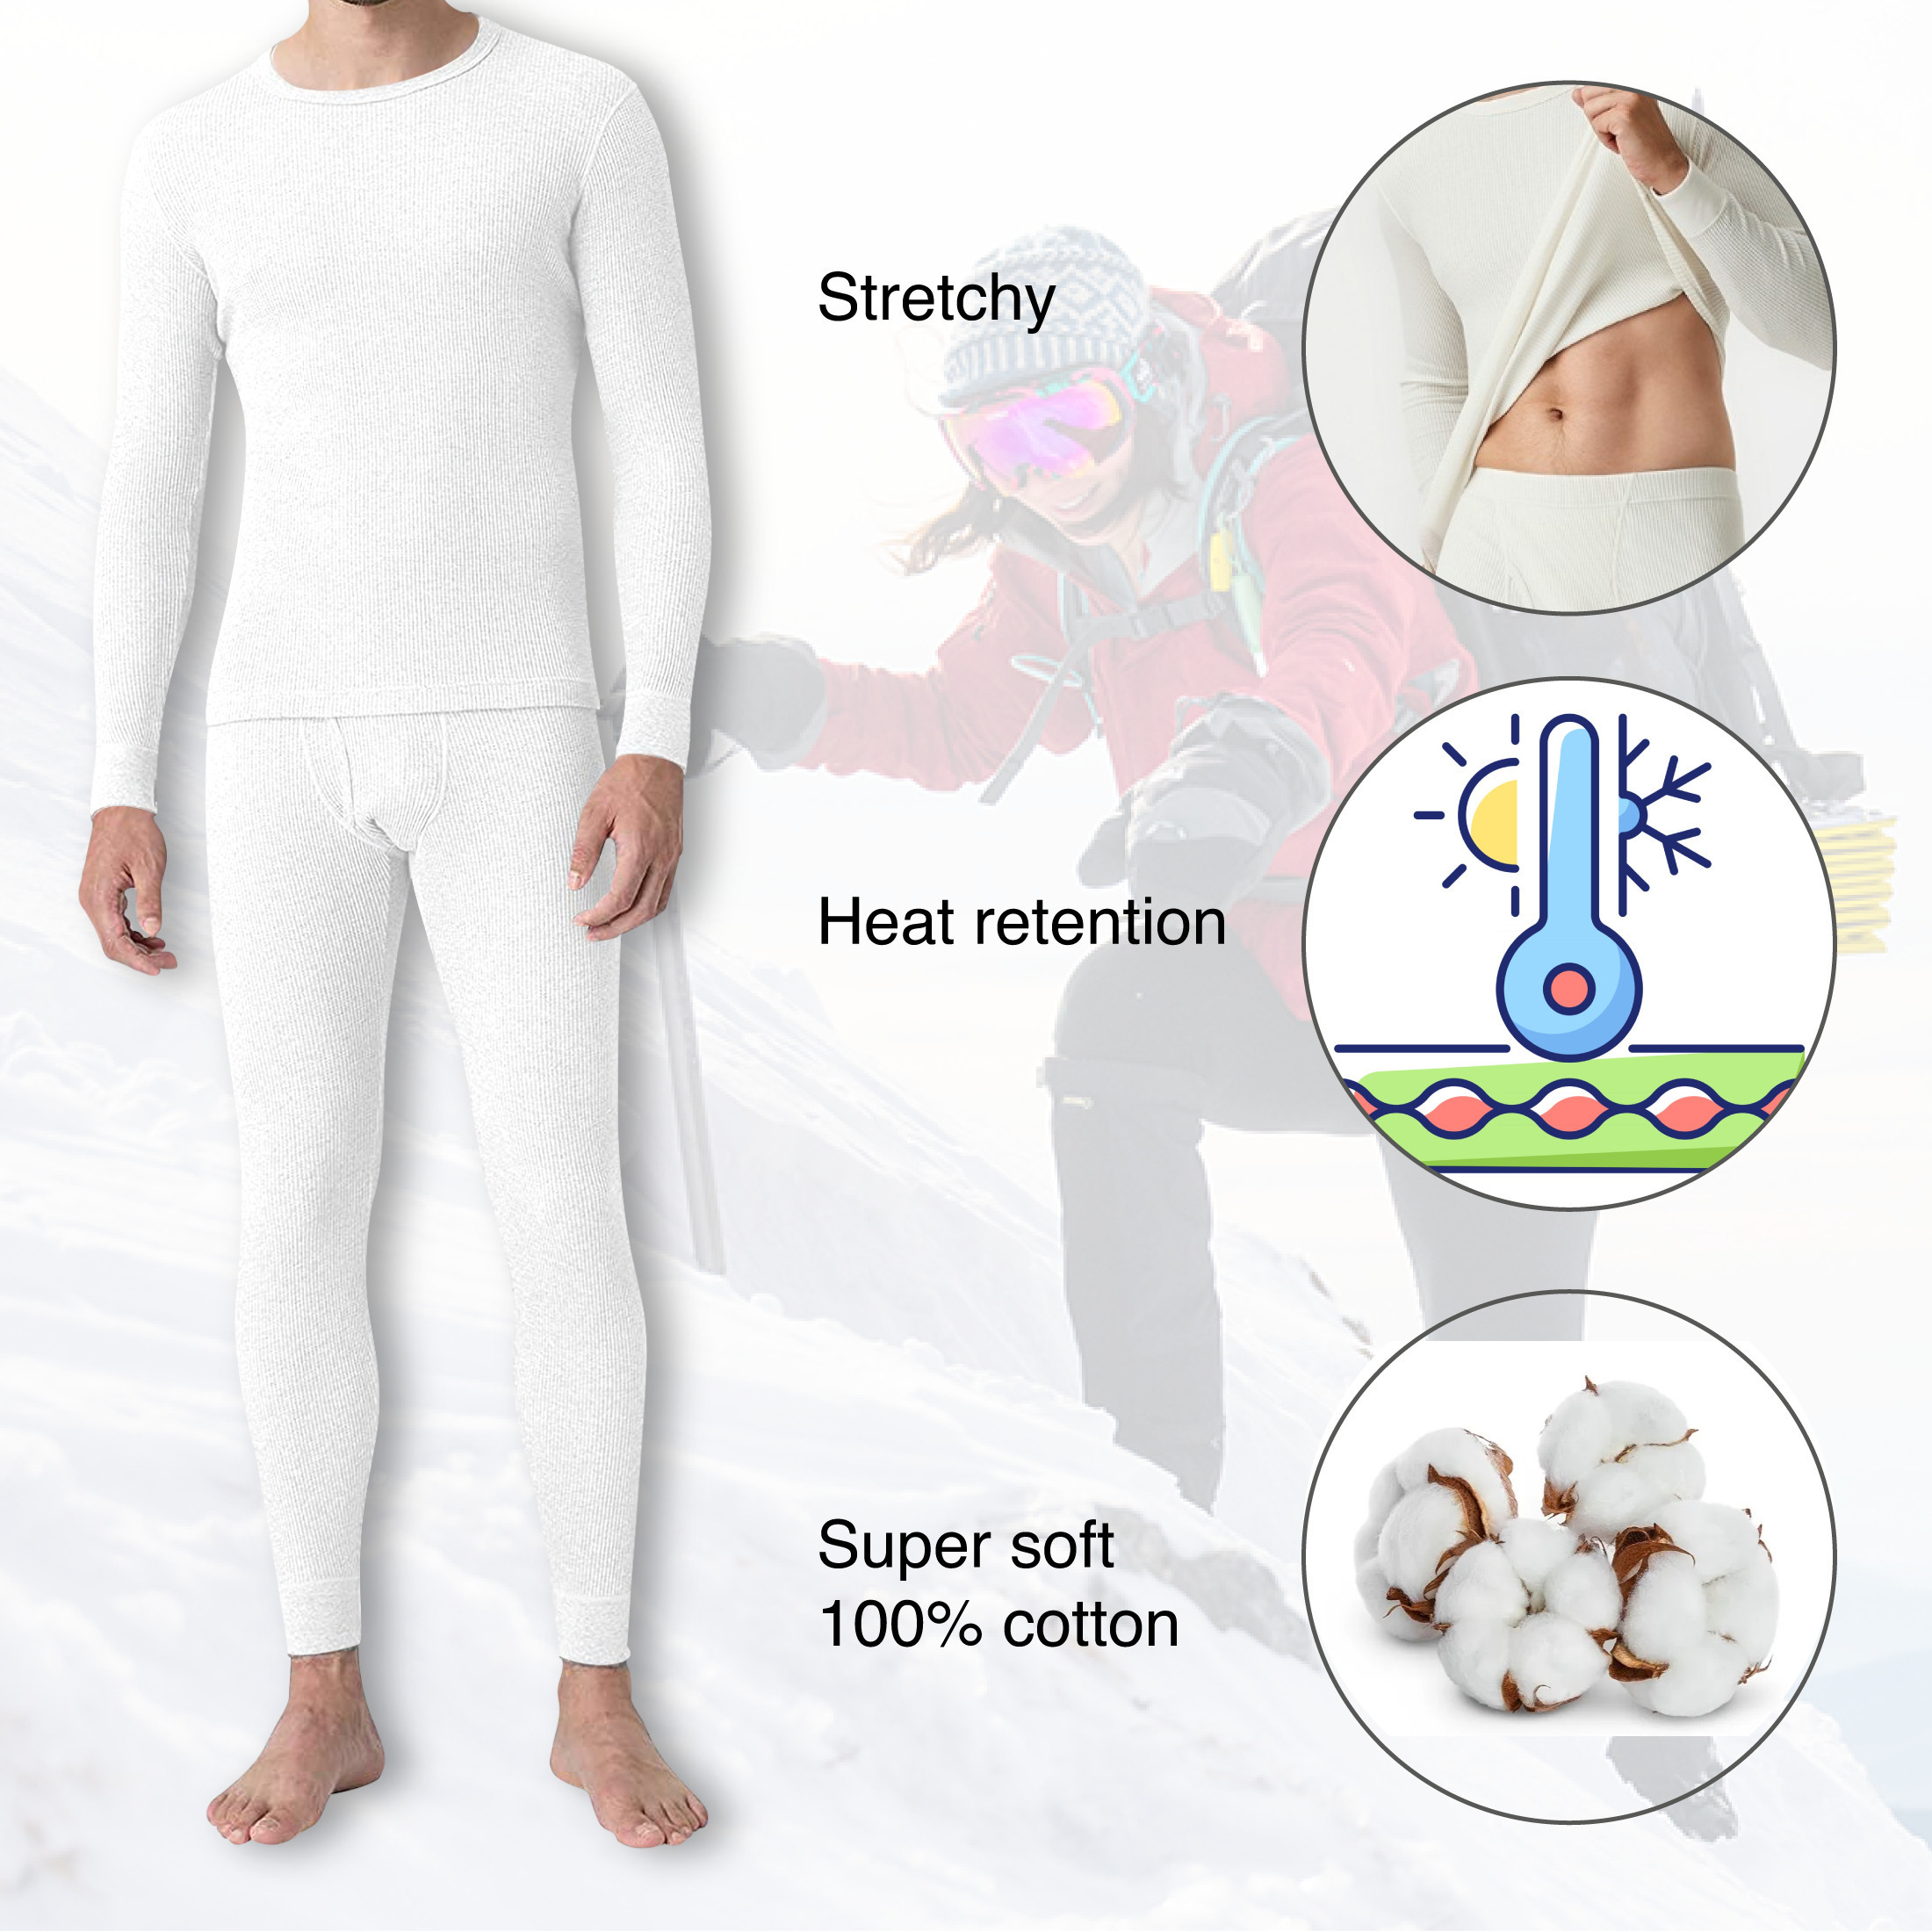 2-Sets: Men's Super Soft Cotton Waffle Knit Winter Thermal Underwear Set - Grey & White, Medium